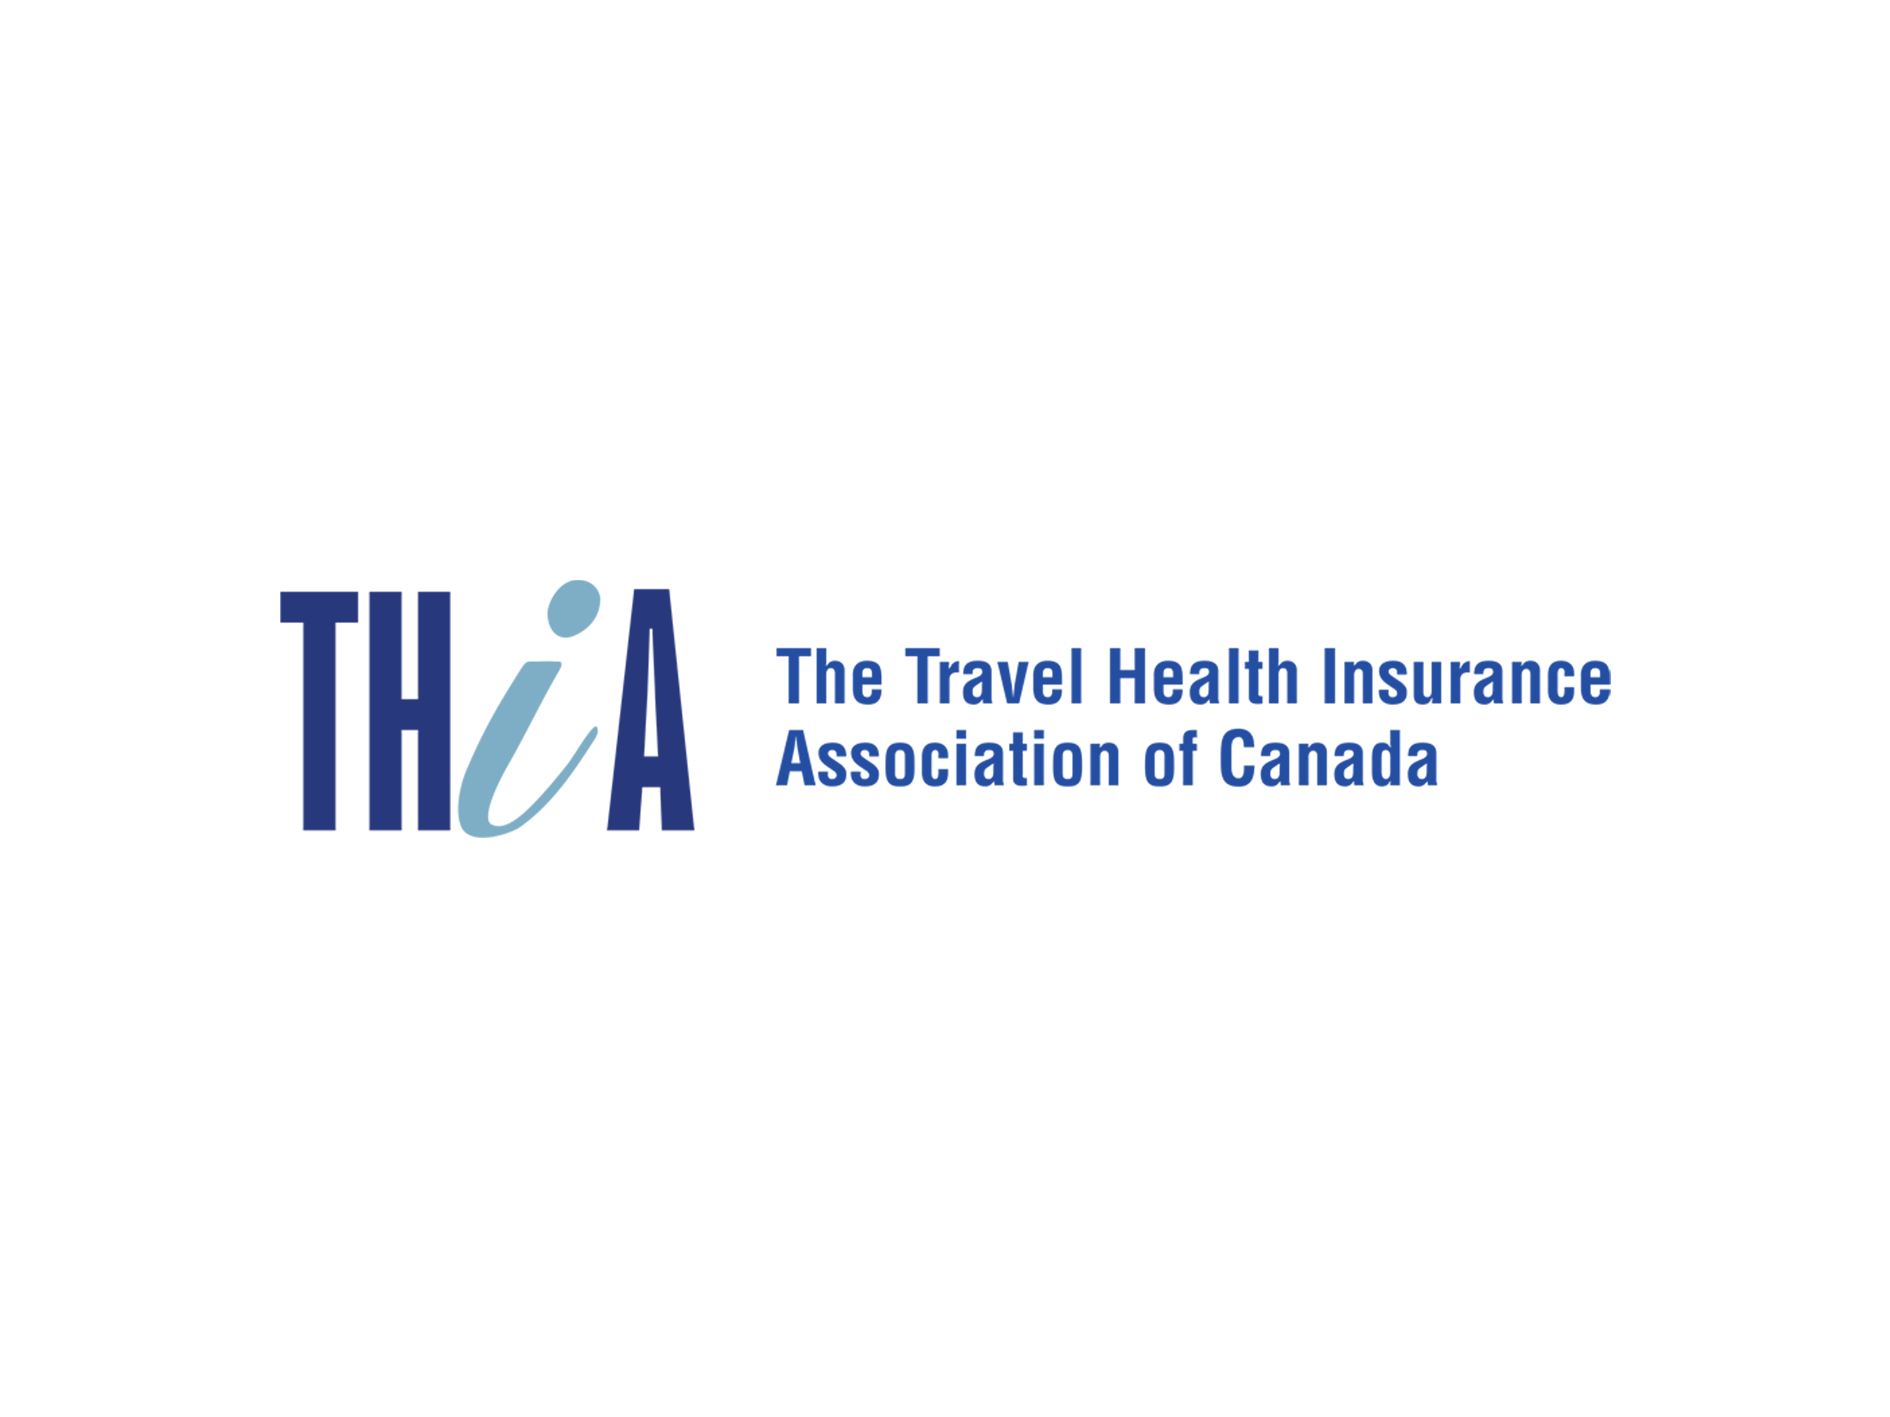 Travel Health Insurance Association